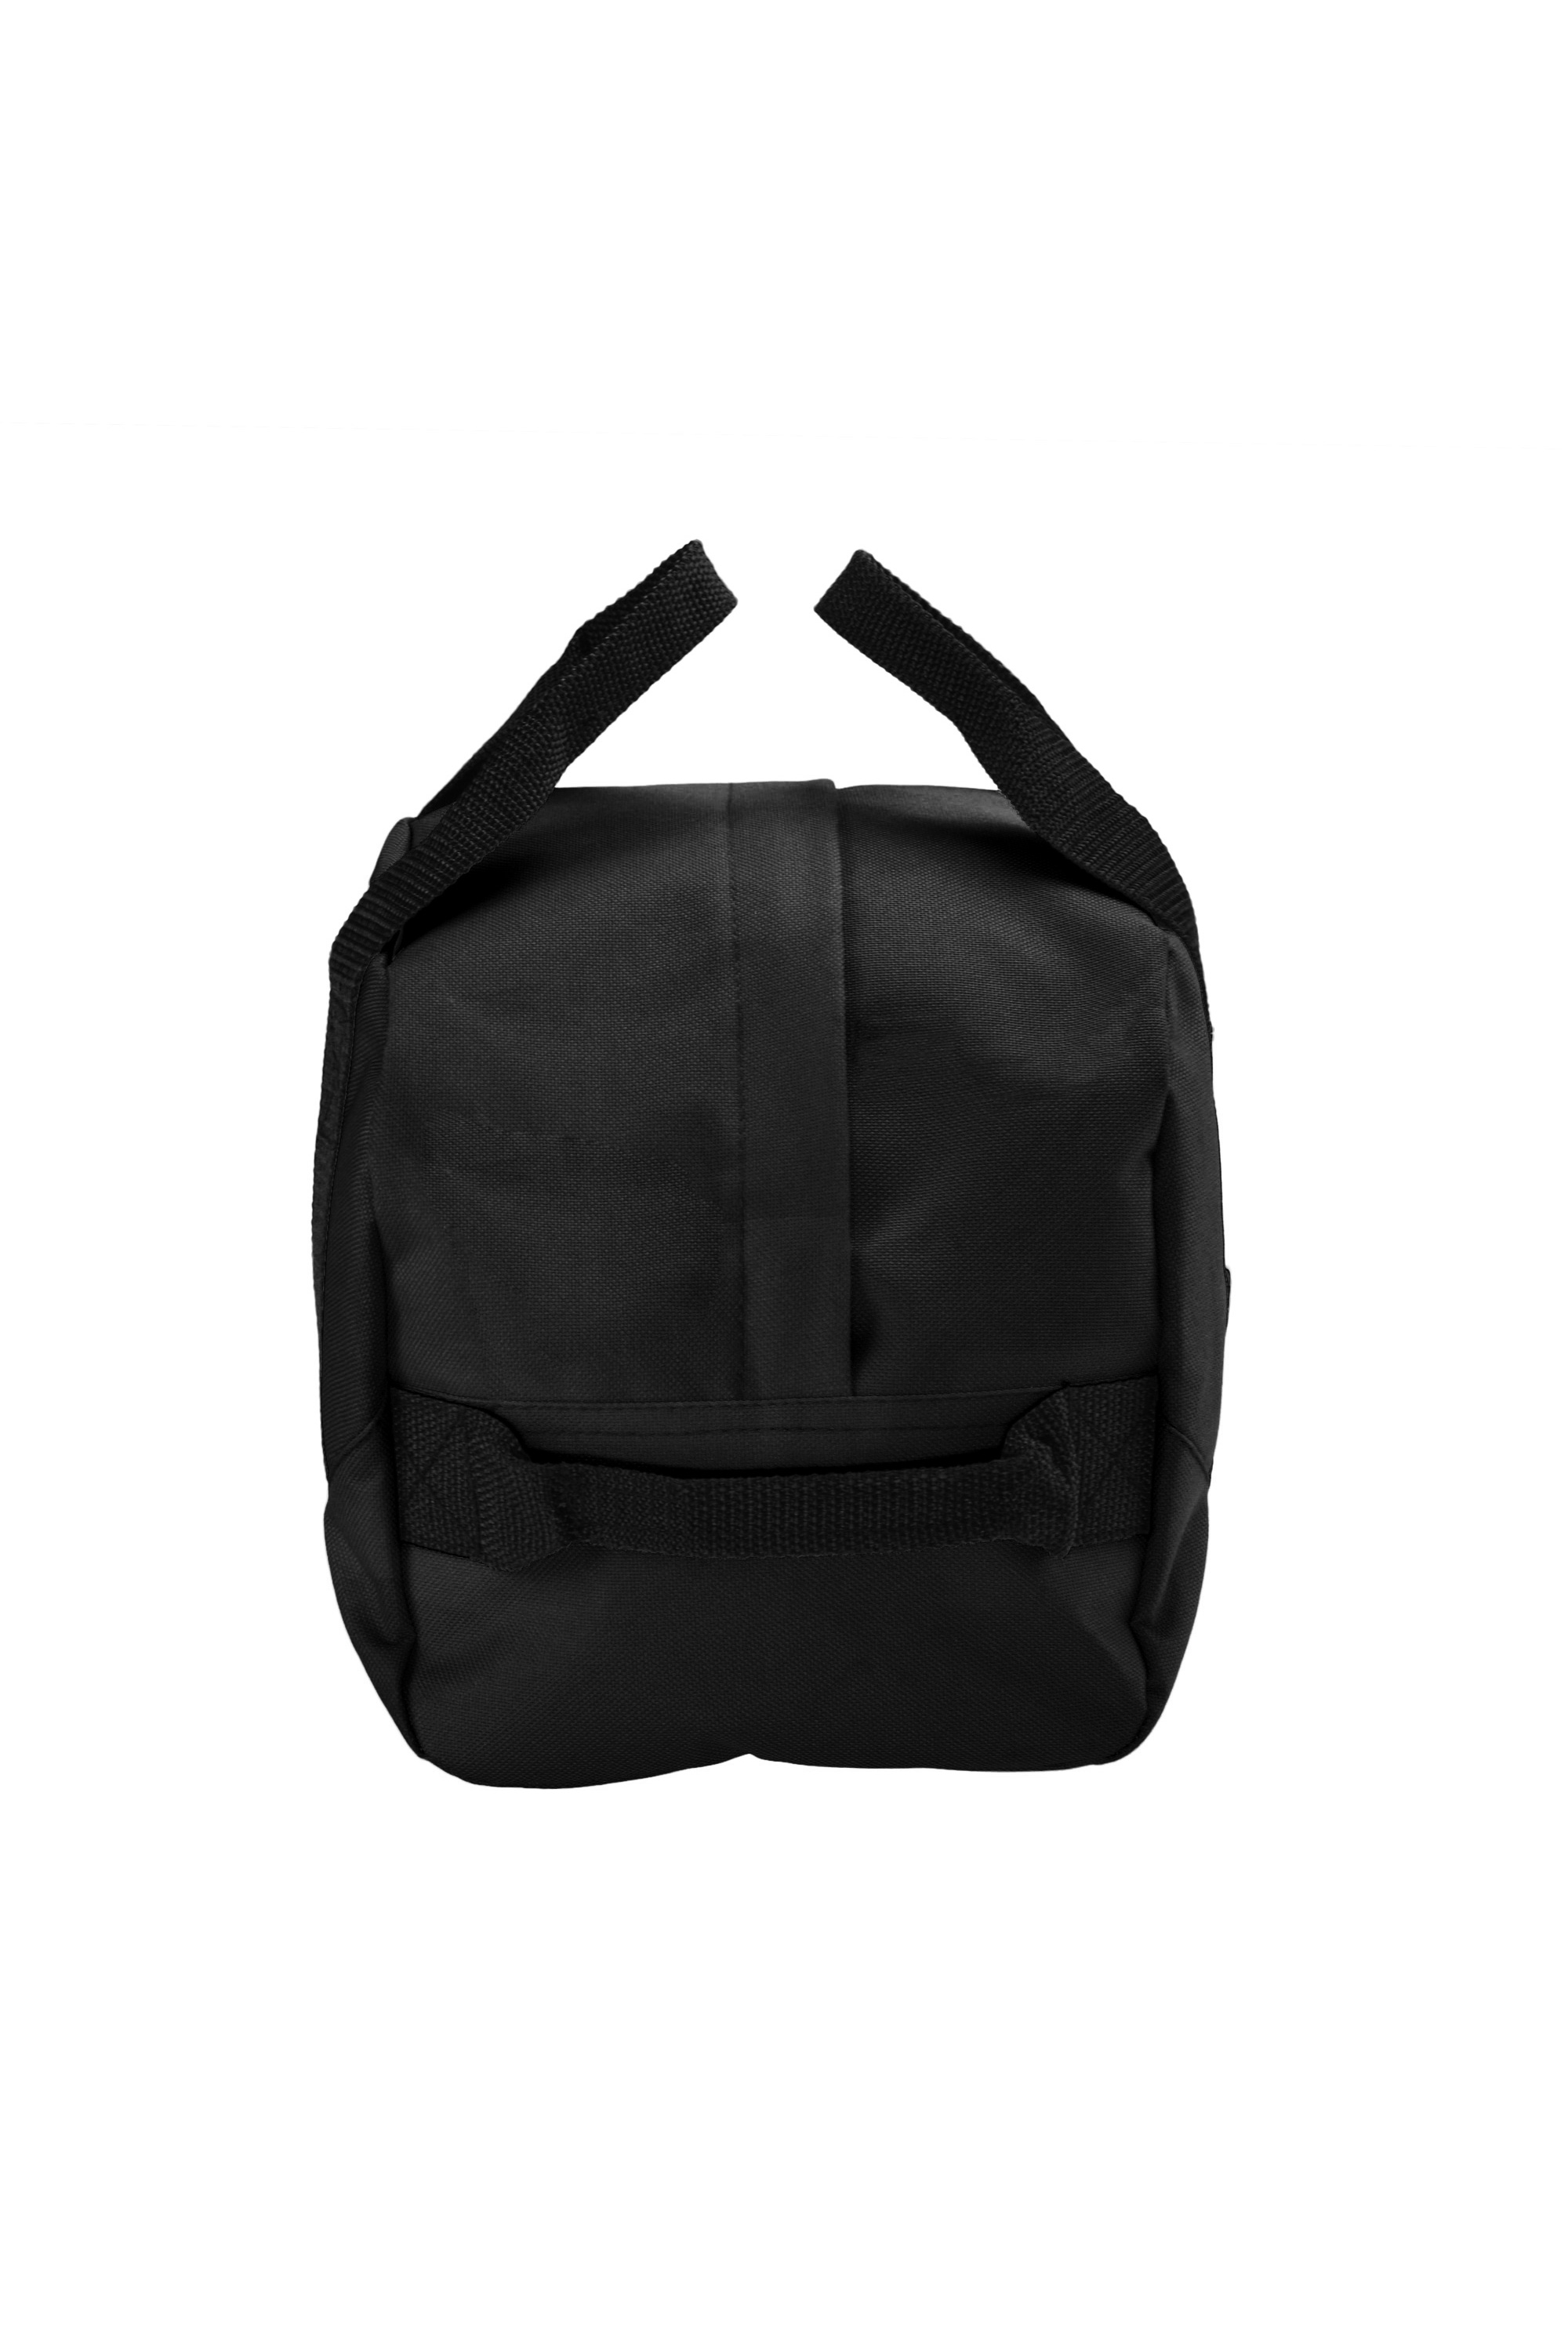 DALIX 12" Mini Duffel Bag Gym Duffle in Black - image 4 of 8